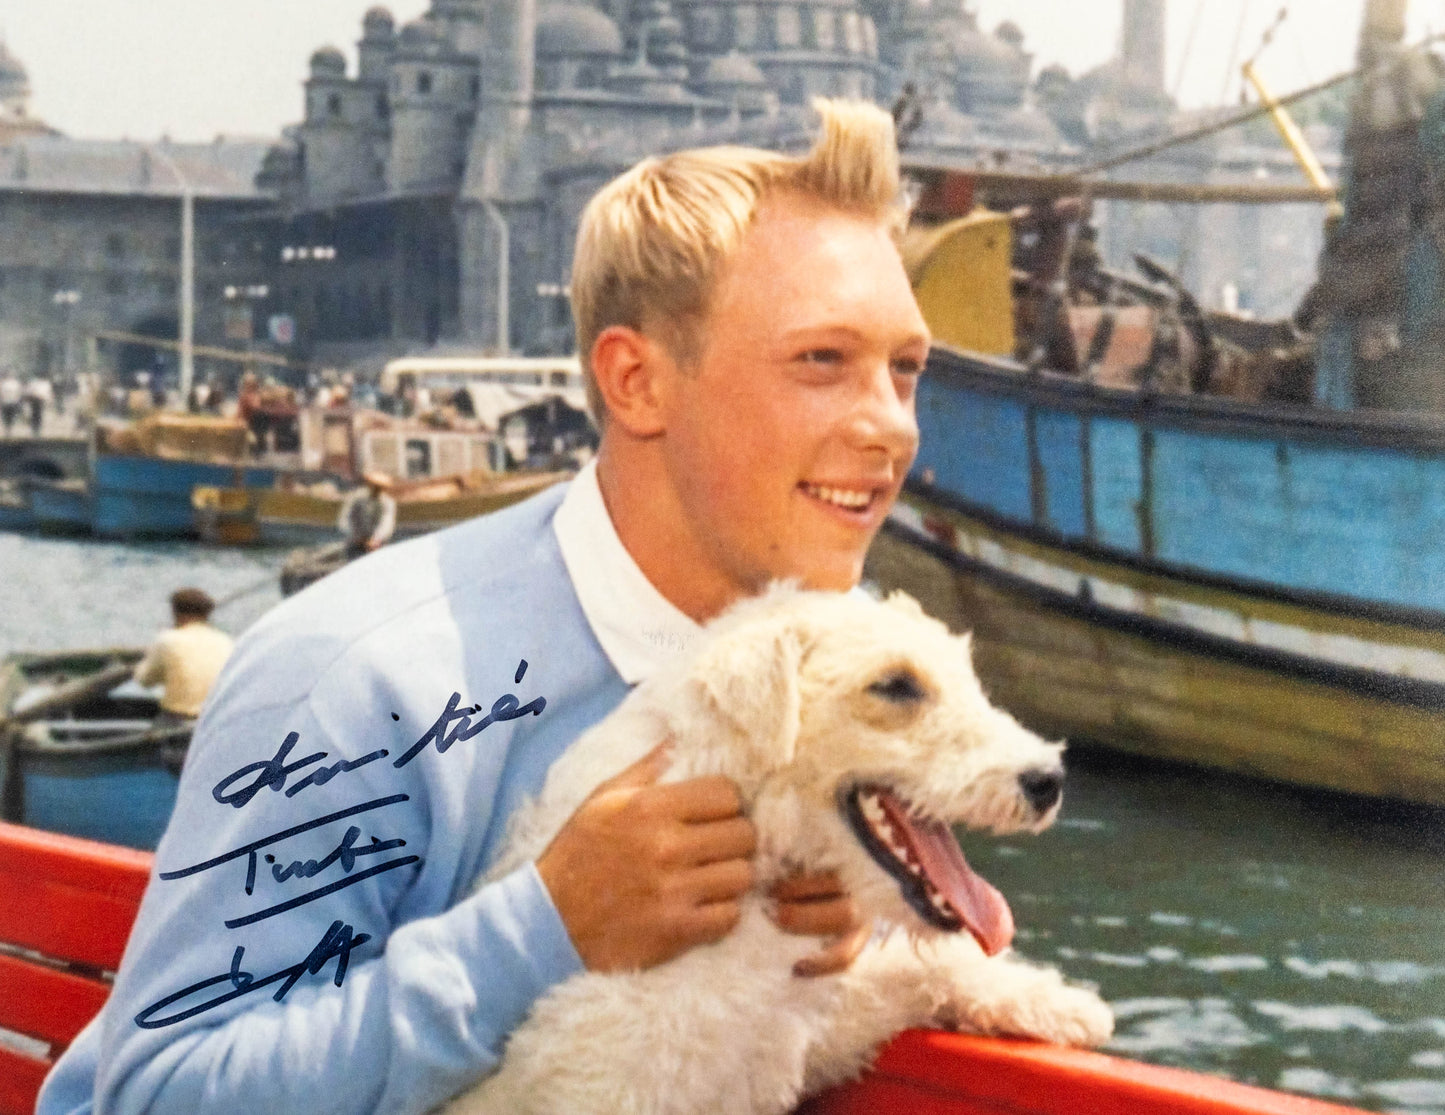 1965 Signed Photo of Jean-Pierre Talbot: Actor of Tintin Golden Fleece 100% Original